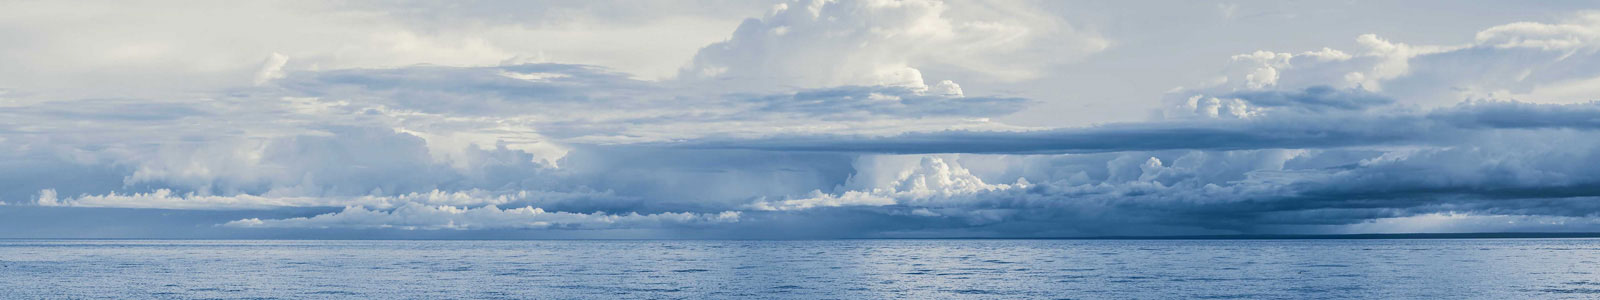 №2662 - Морской горизонт с облаками